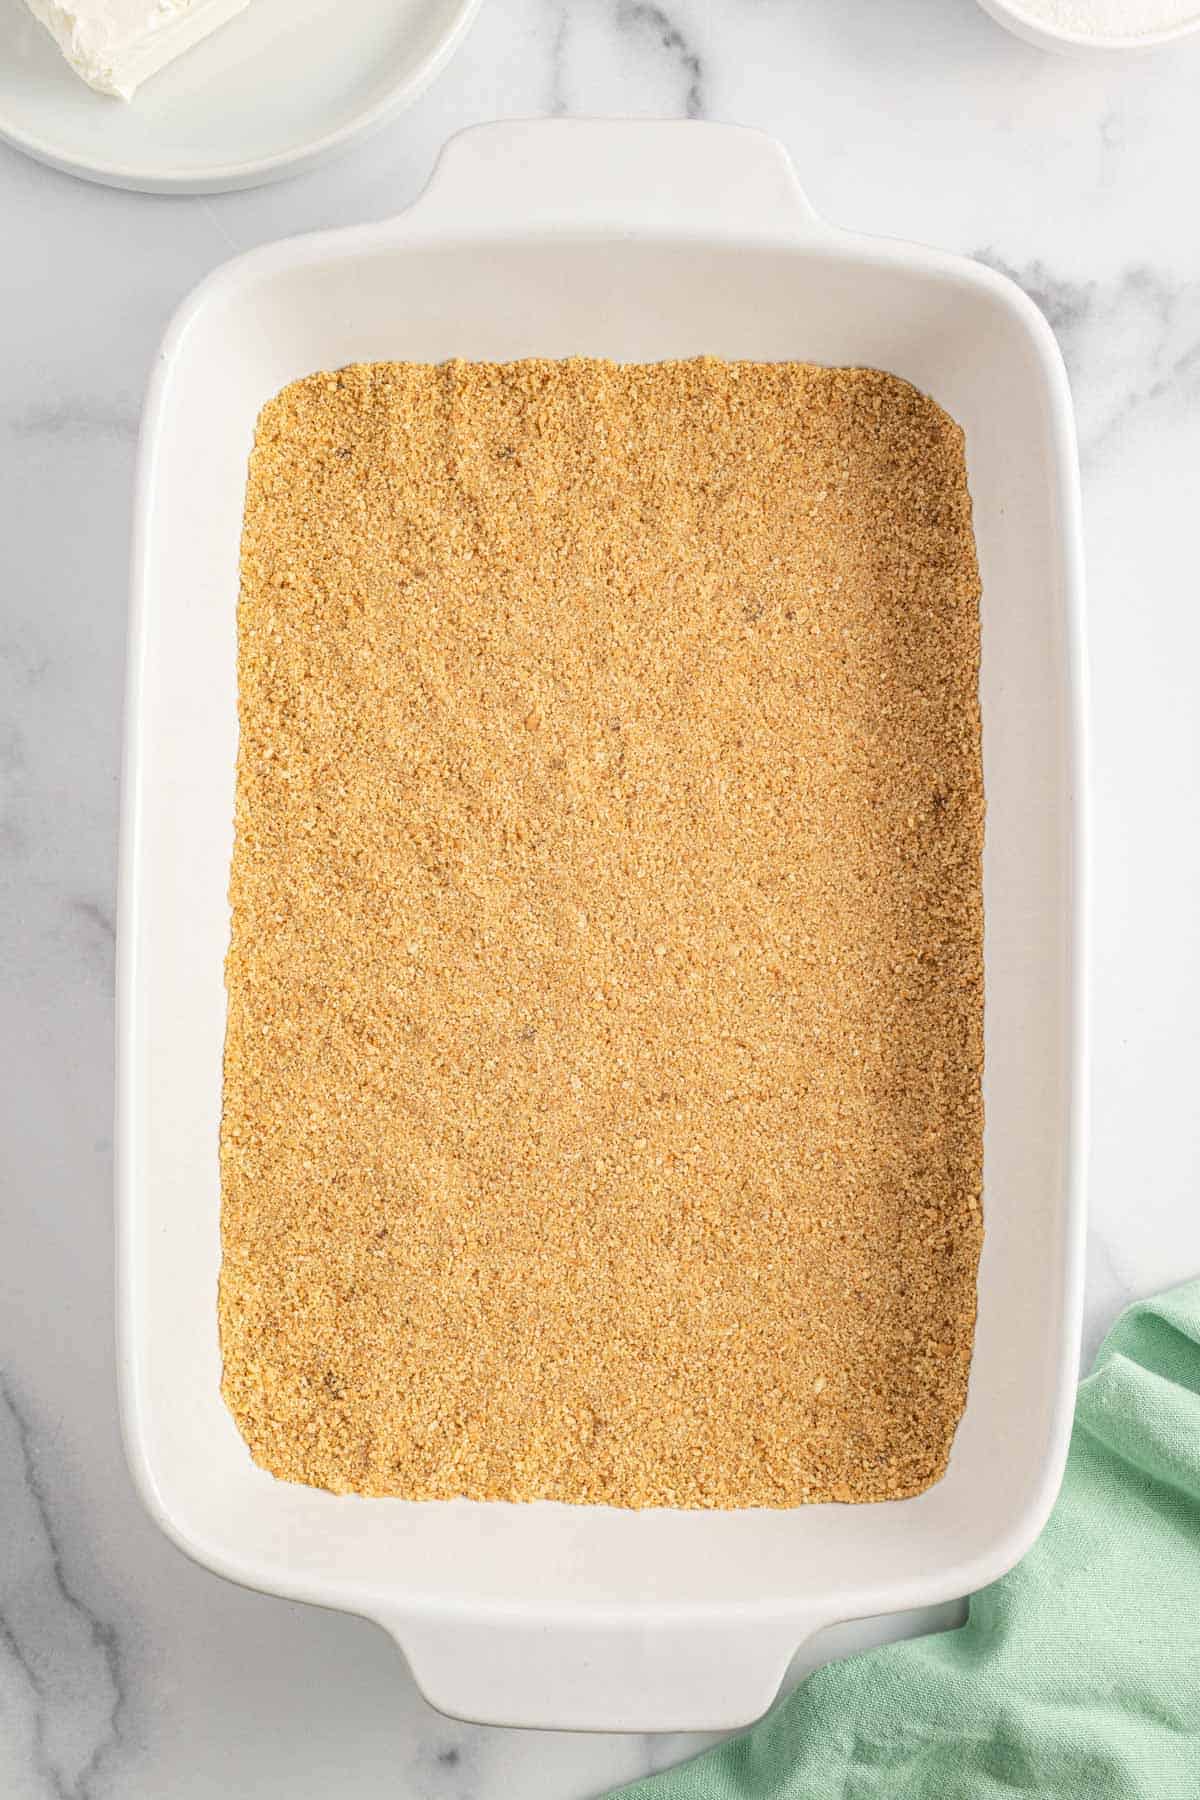 graham crumb base in a baking dish